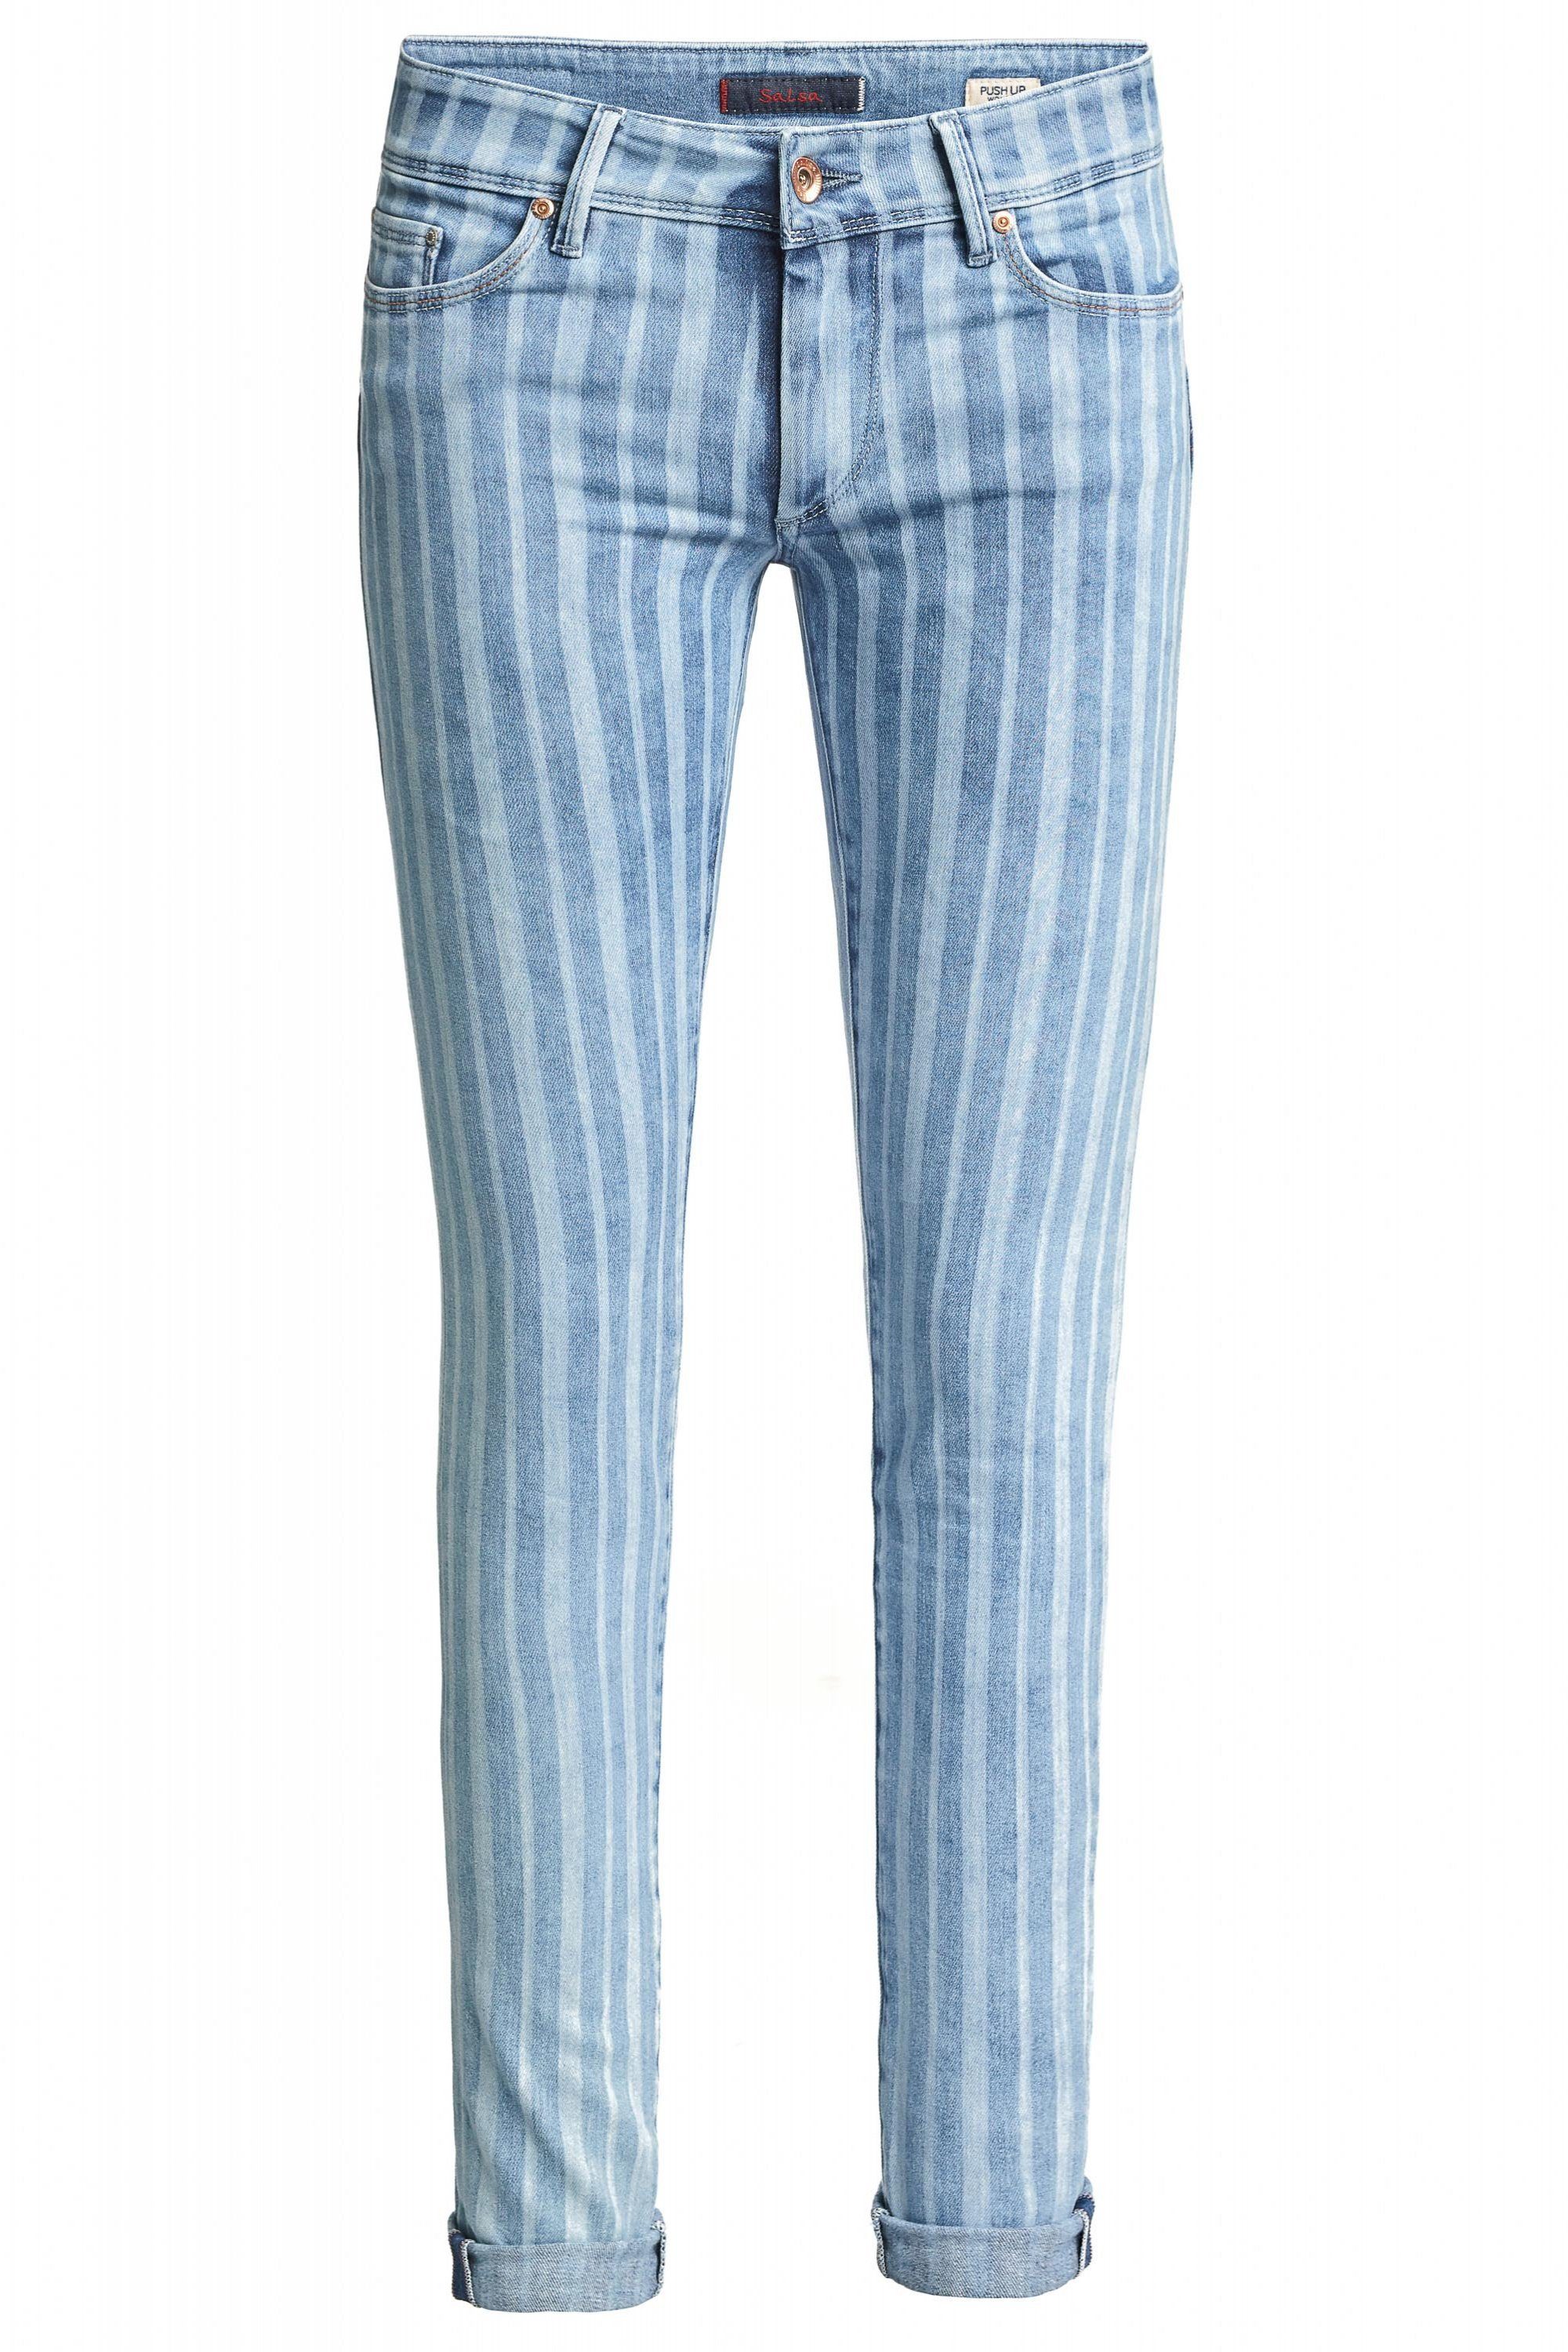 out SALSA 125081.8502 washed JEANS WONDER PUSH stripes UP Stretch-Jeans blue Salsa